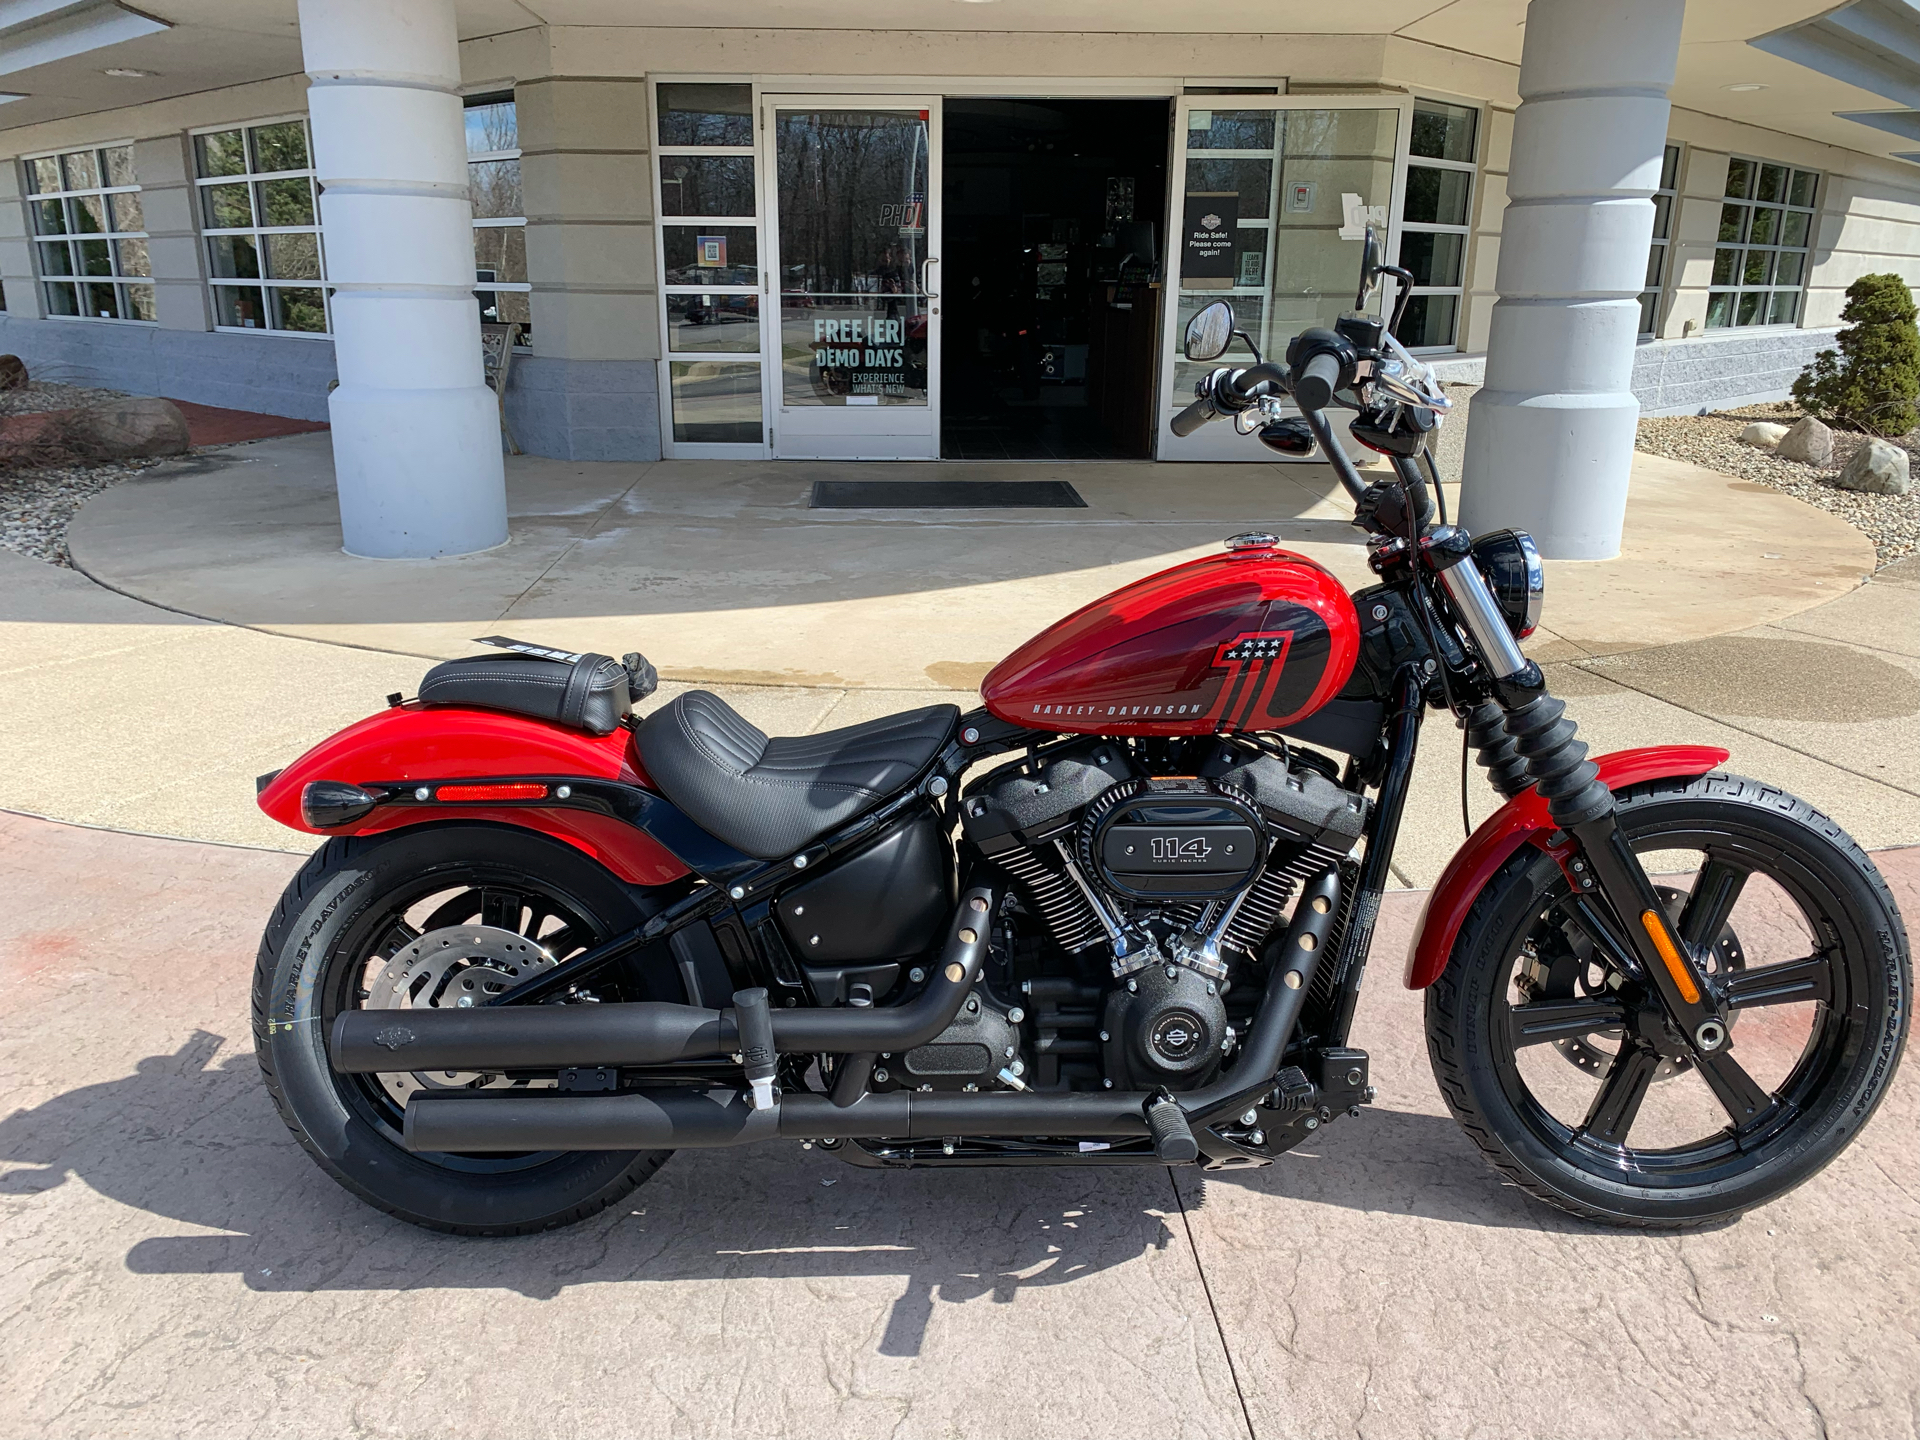 2022 Harley-Davidson Street Bob® 114 in Portage, Michigan - Photo 6